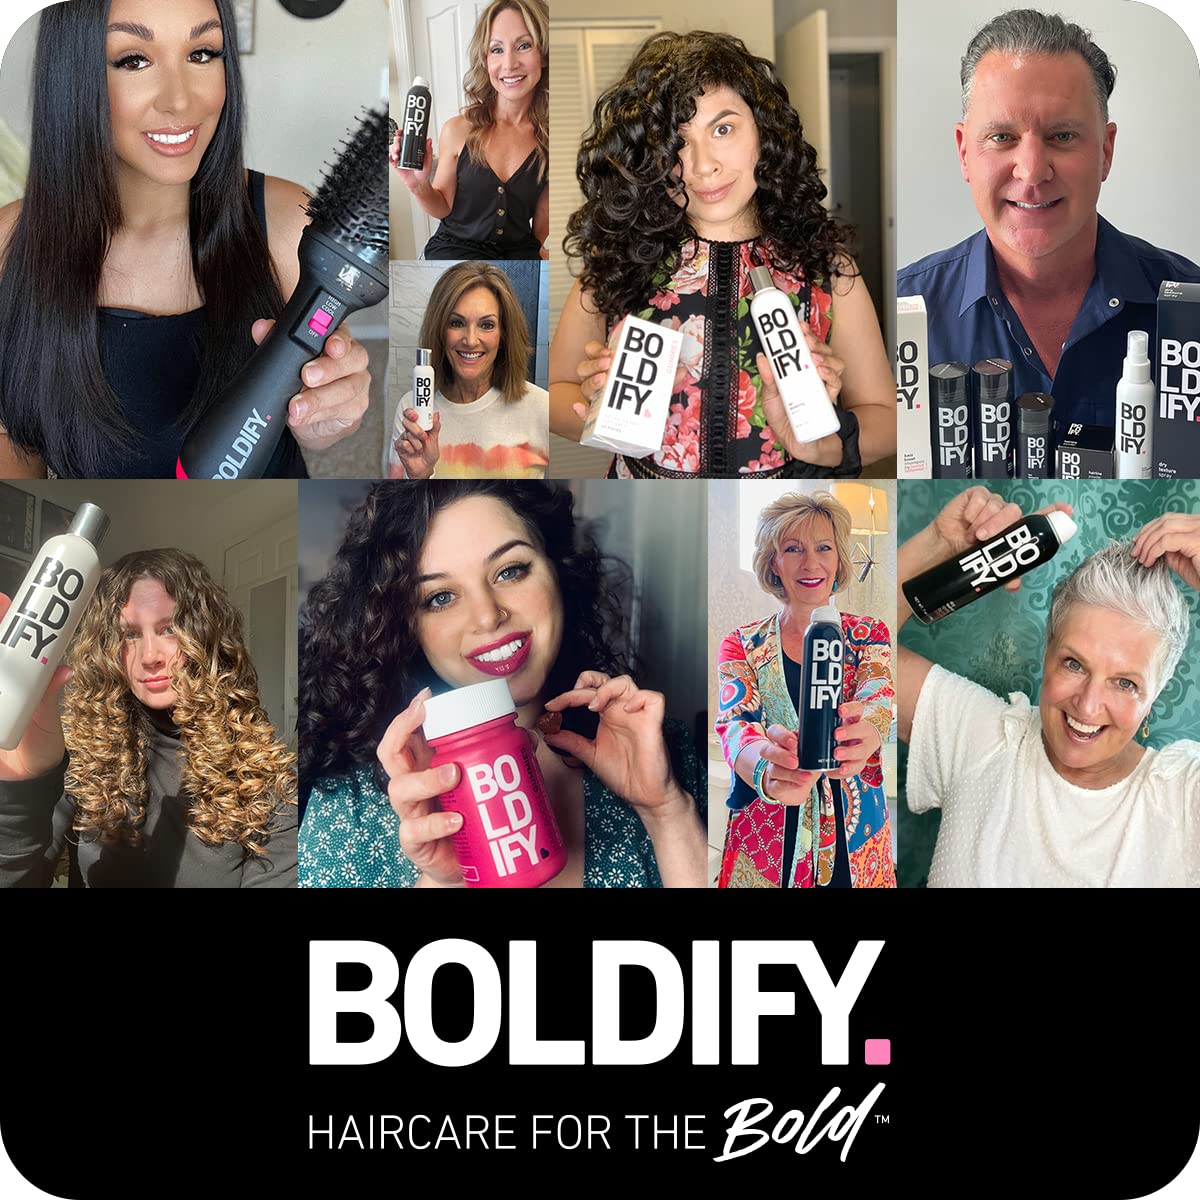 BOLDIFY Hair Fibers for Thinning Hair (AUBURN) Hair Powder - 12g Bottle - Undetectable & Natural Hair Filler Instantly Conceals Hair Loss - Hair Thickener, Topper for Fine Hair for Women & Men​